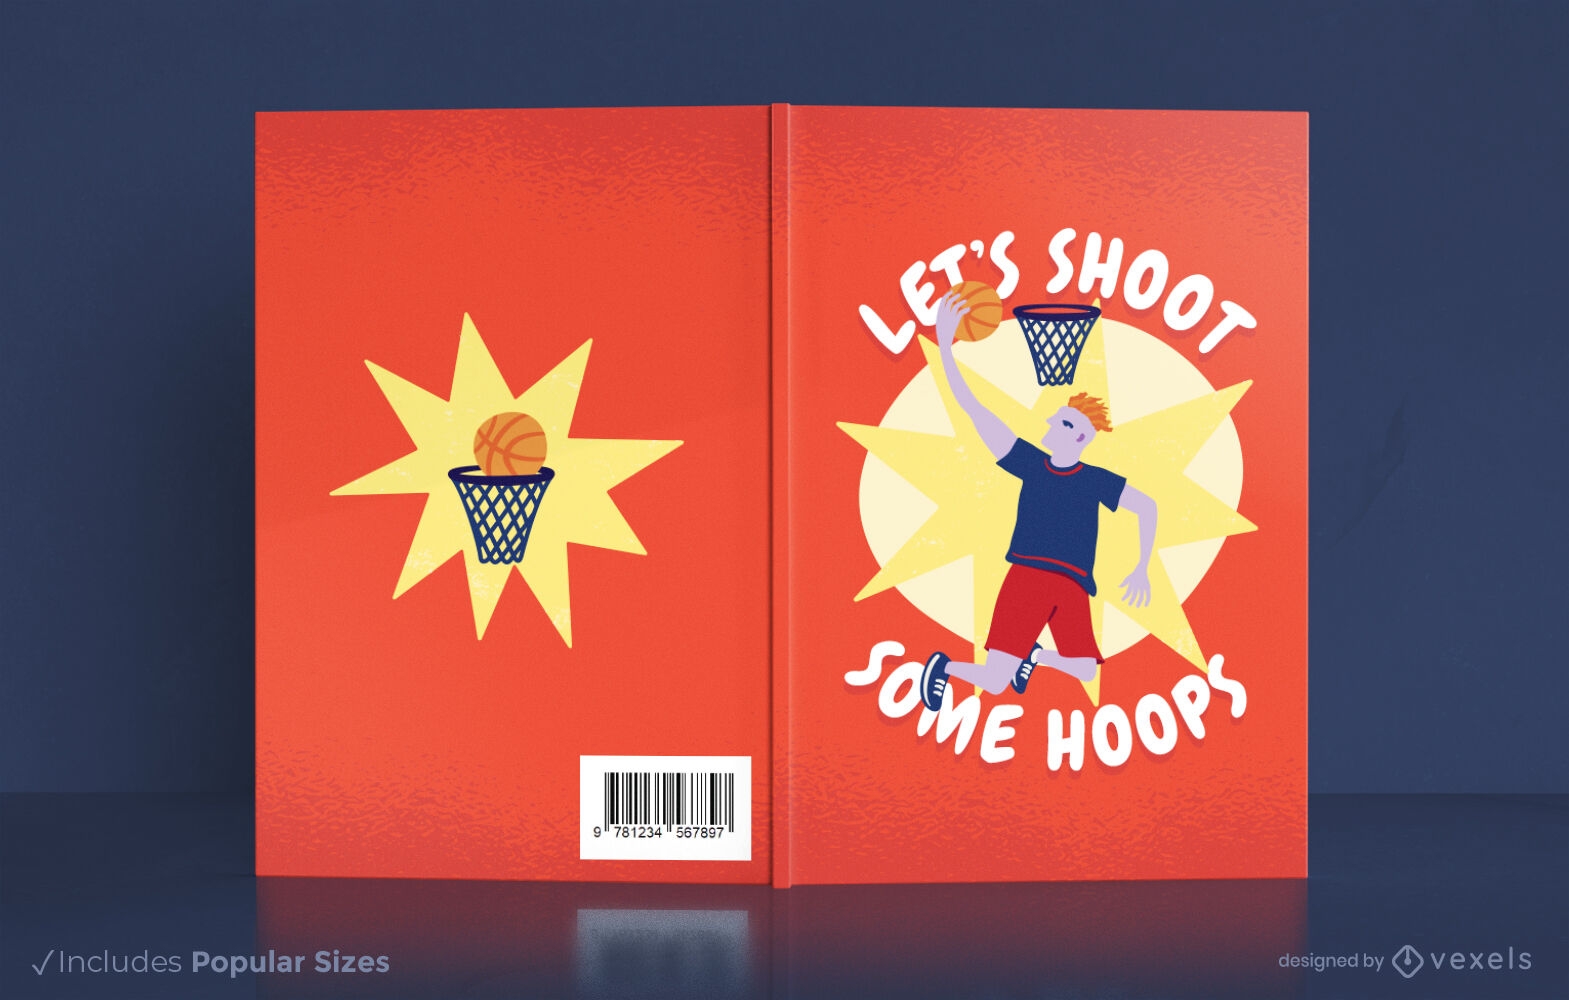 Shoot some hoops basketball book cover design